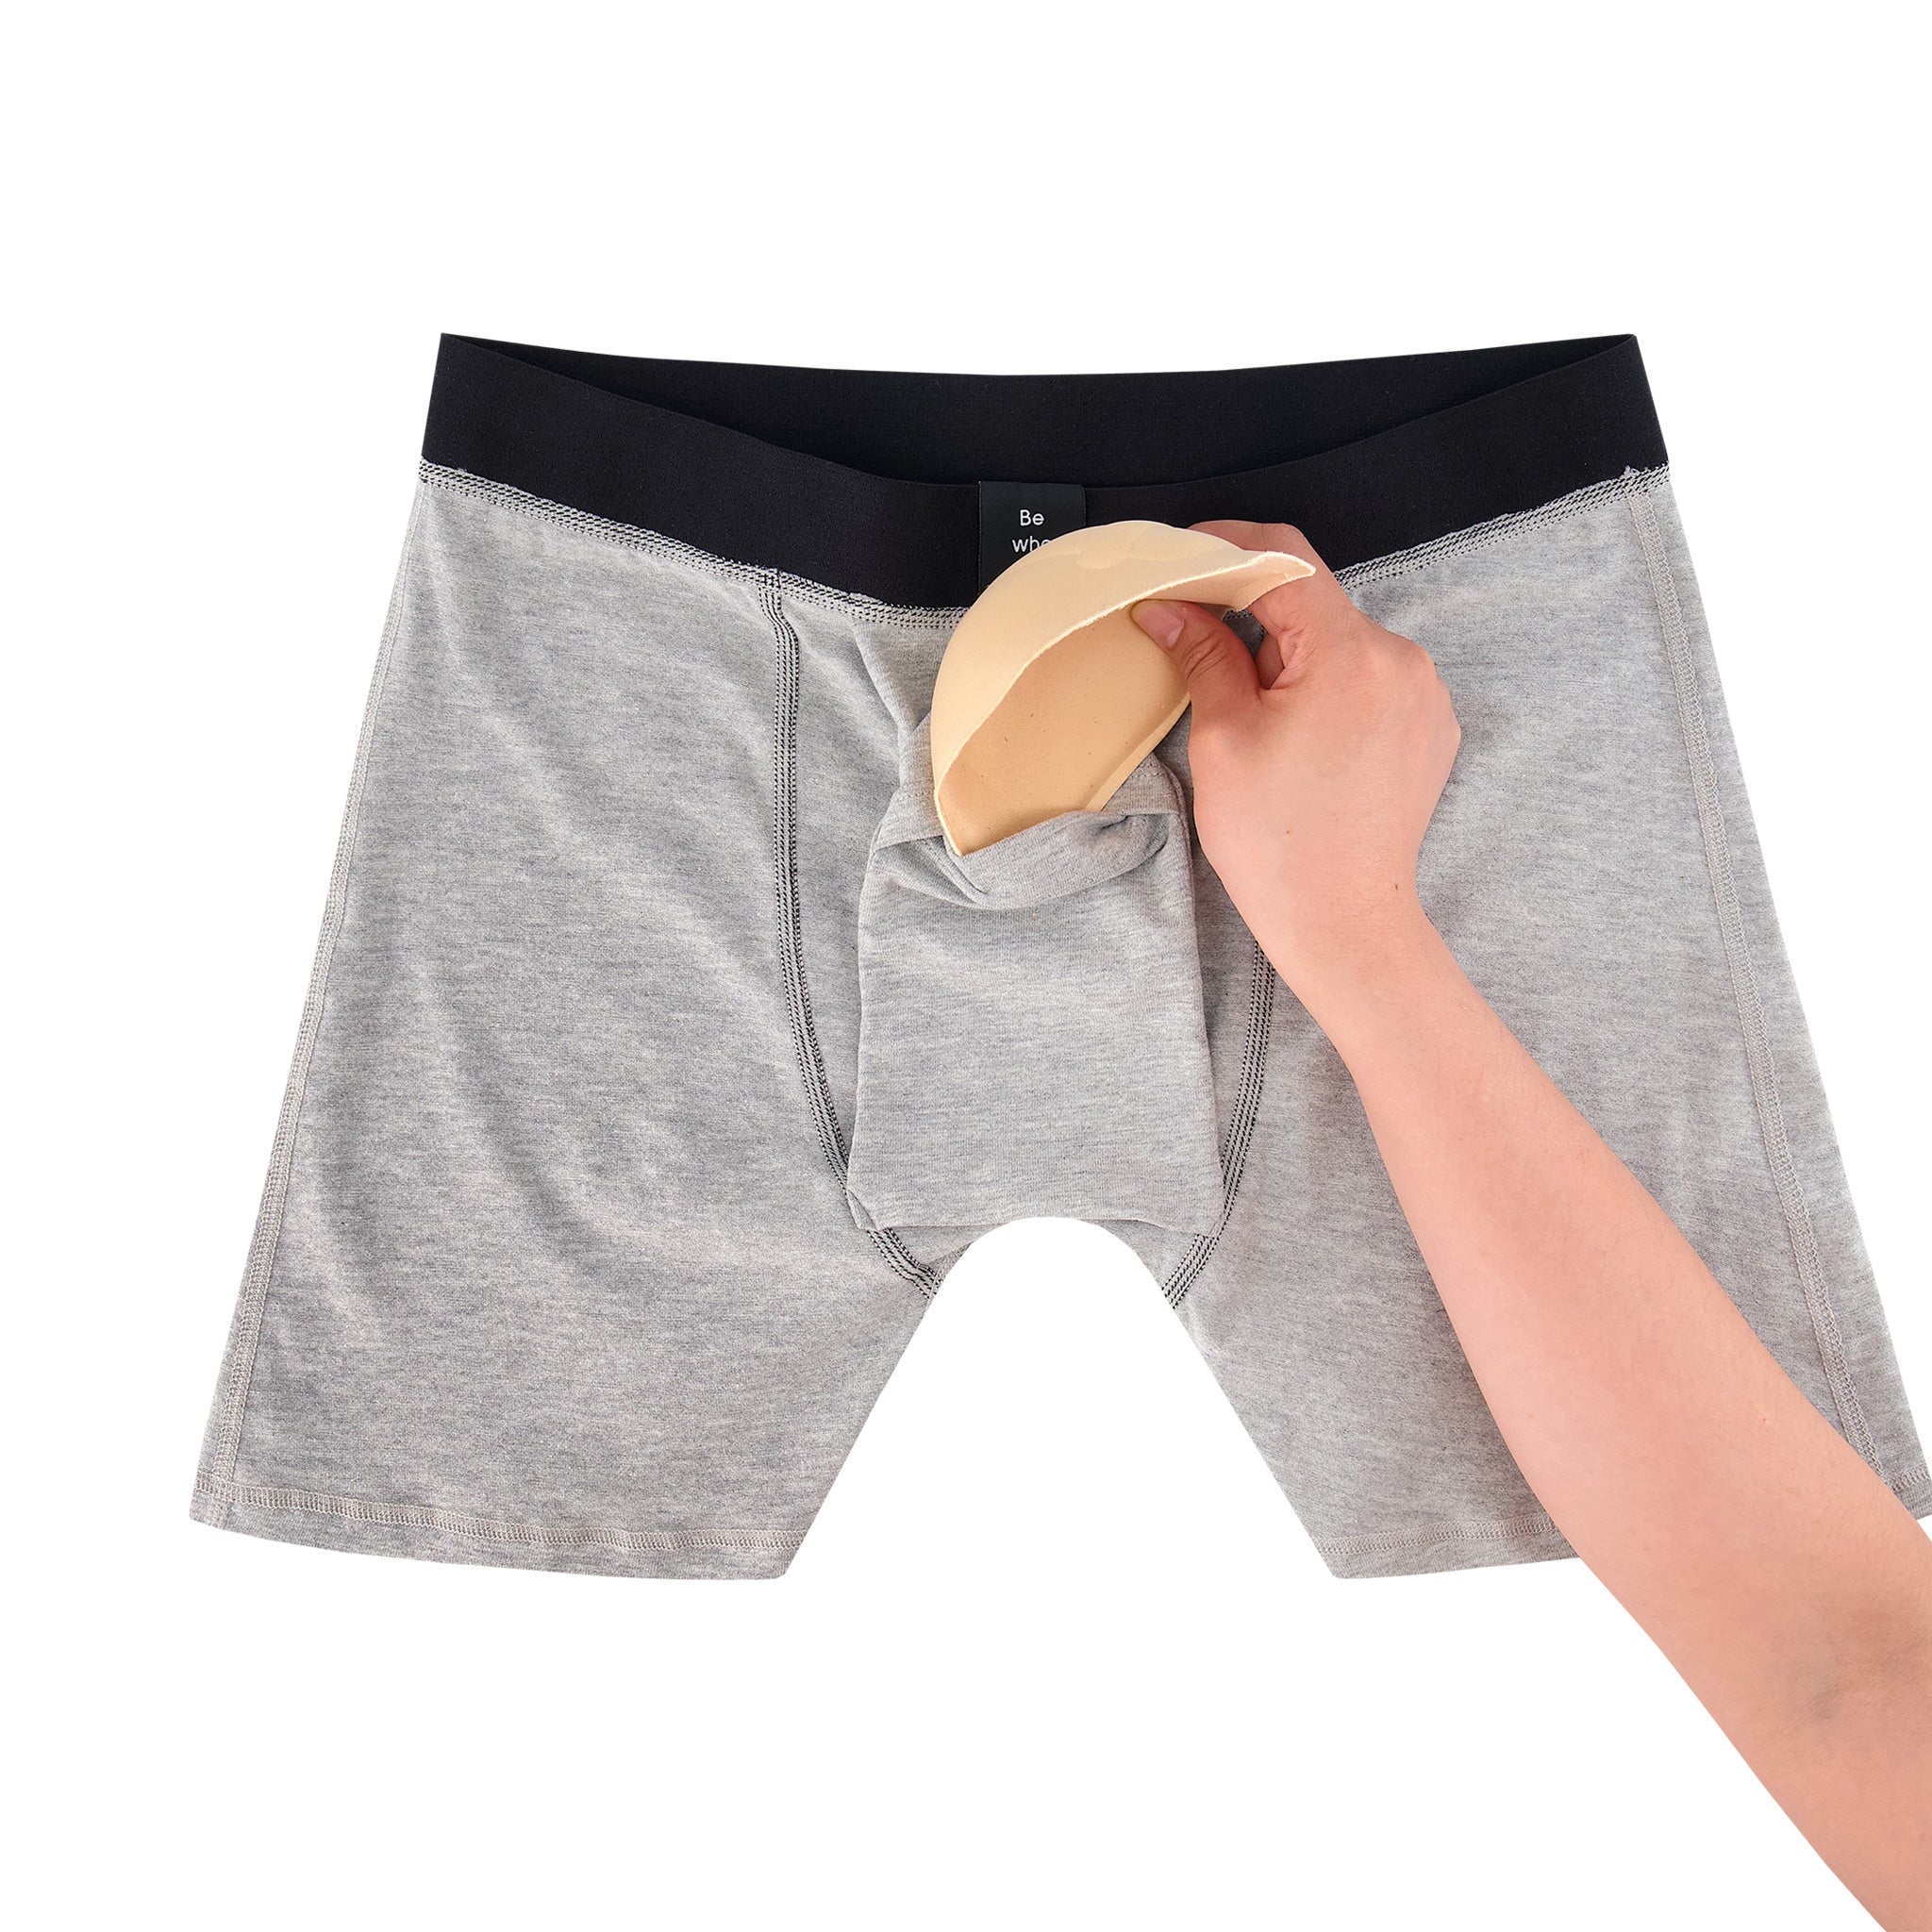 Whipsmart Discreet Packer Underwear with Pocket FTM Boxer Soft